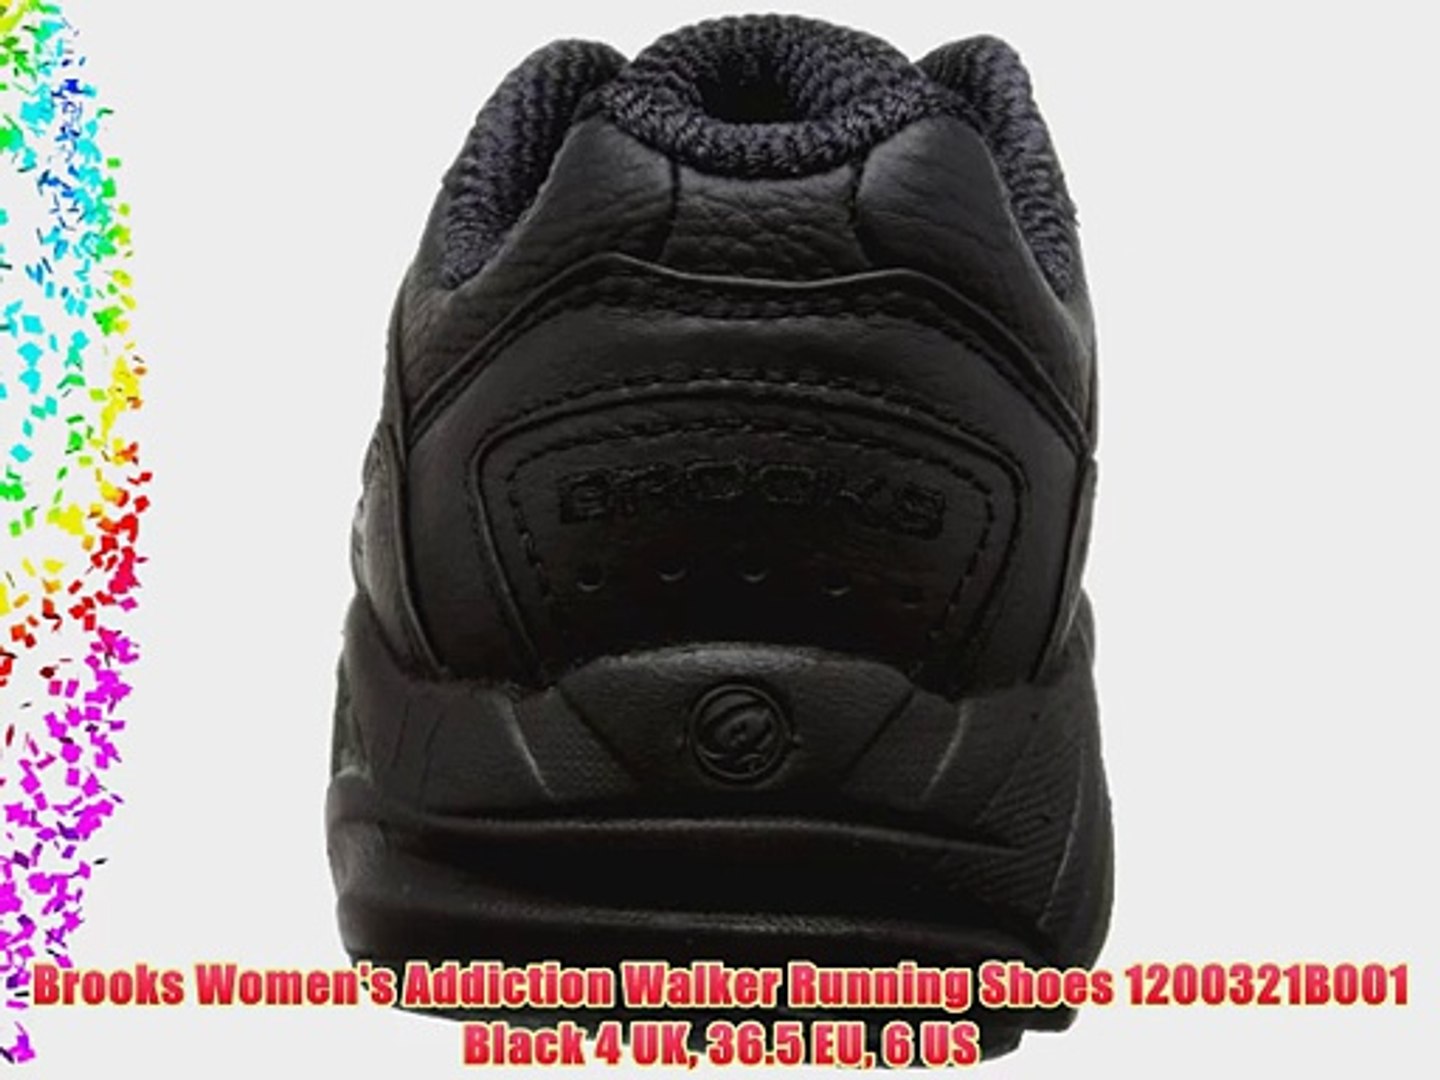 brooks women's addiction walker shoes